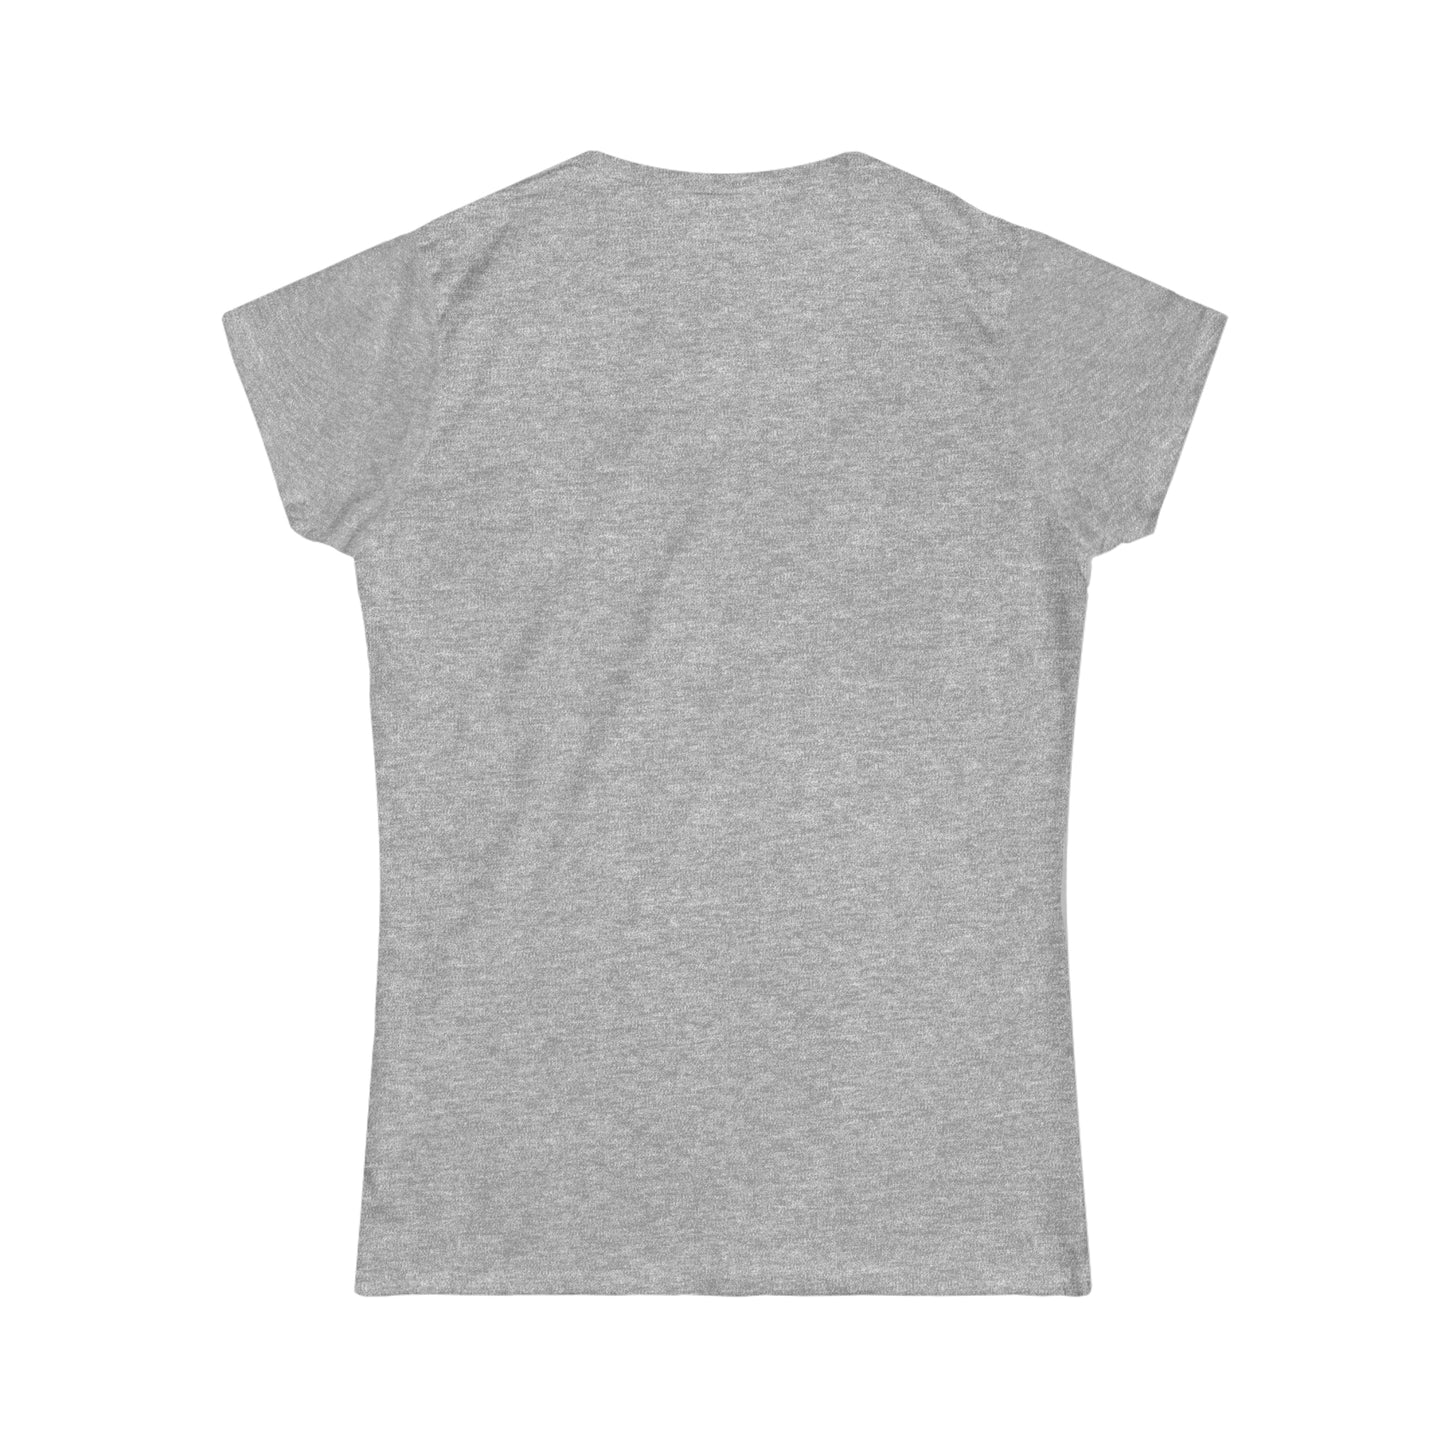 Camiseta Amor Todos los días / Love Every Day - Women's Softstyle Tee